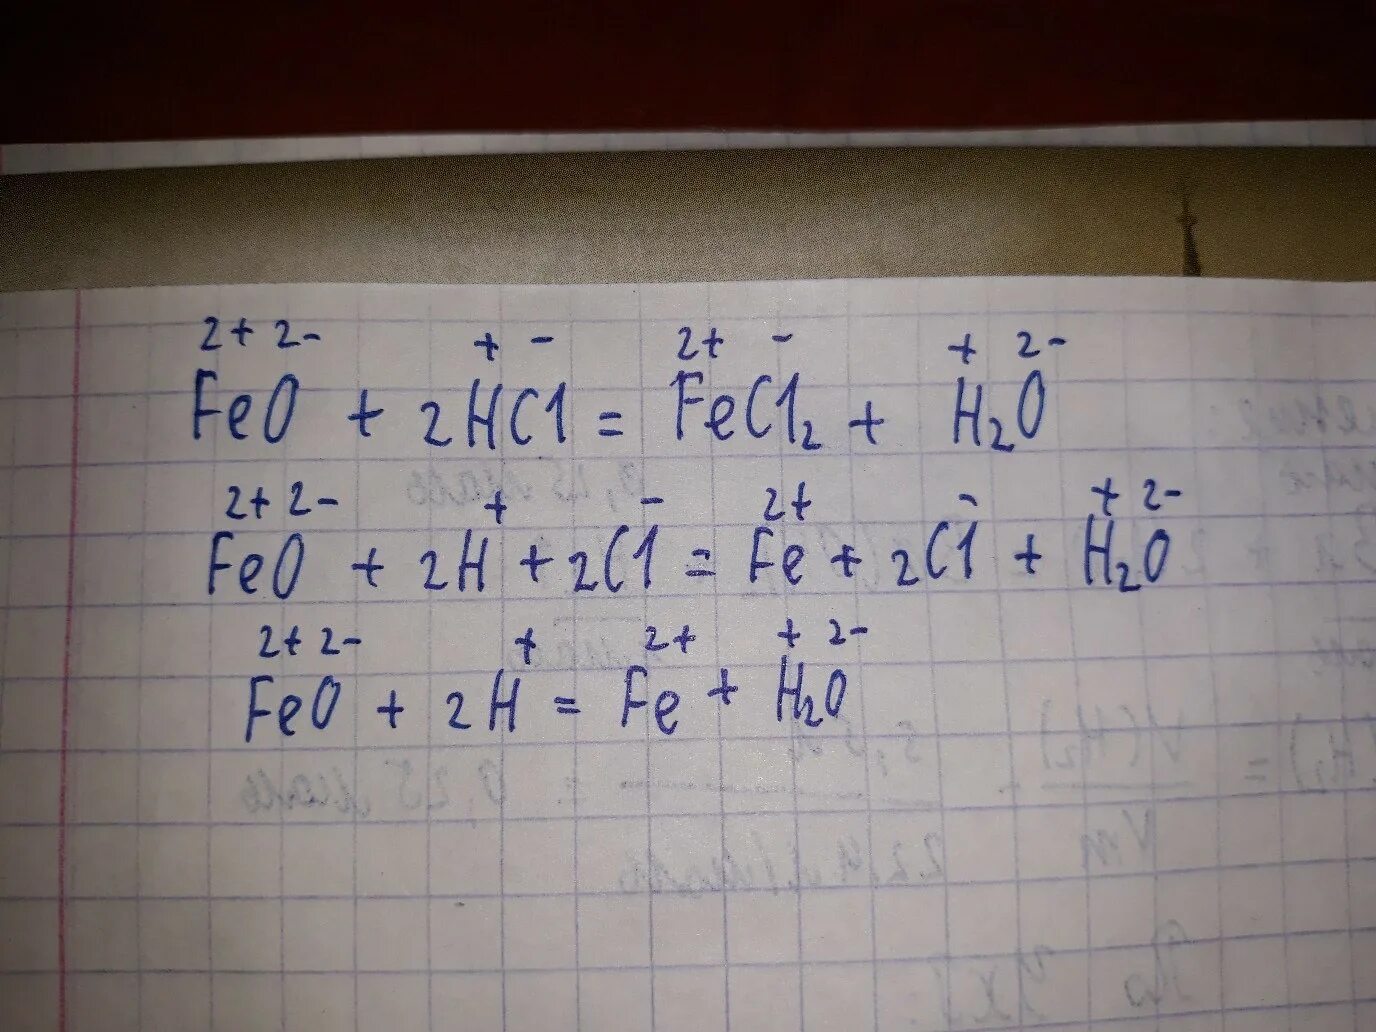 Fe feo hcl. Feo+2hcl ионное уравнение. Feo+HCL уравнение. Feo 2hcl fecl2 h2o ионное уравнение. Feo+HCL уравнение реакции.